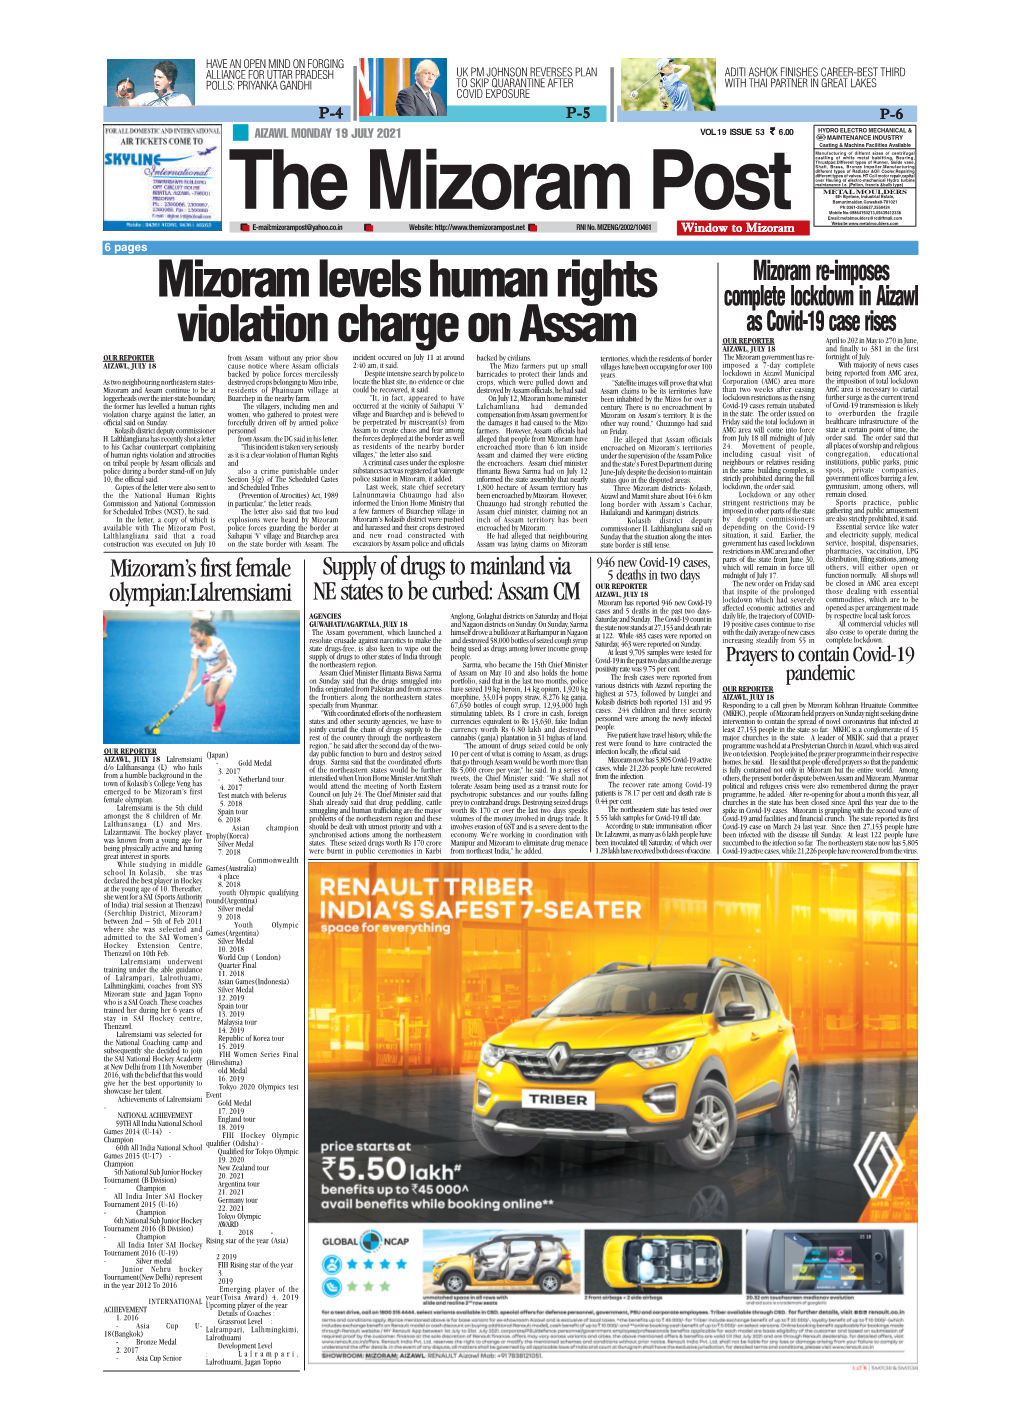 Mizoram Levels Human Rights Violation Charge on Assam